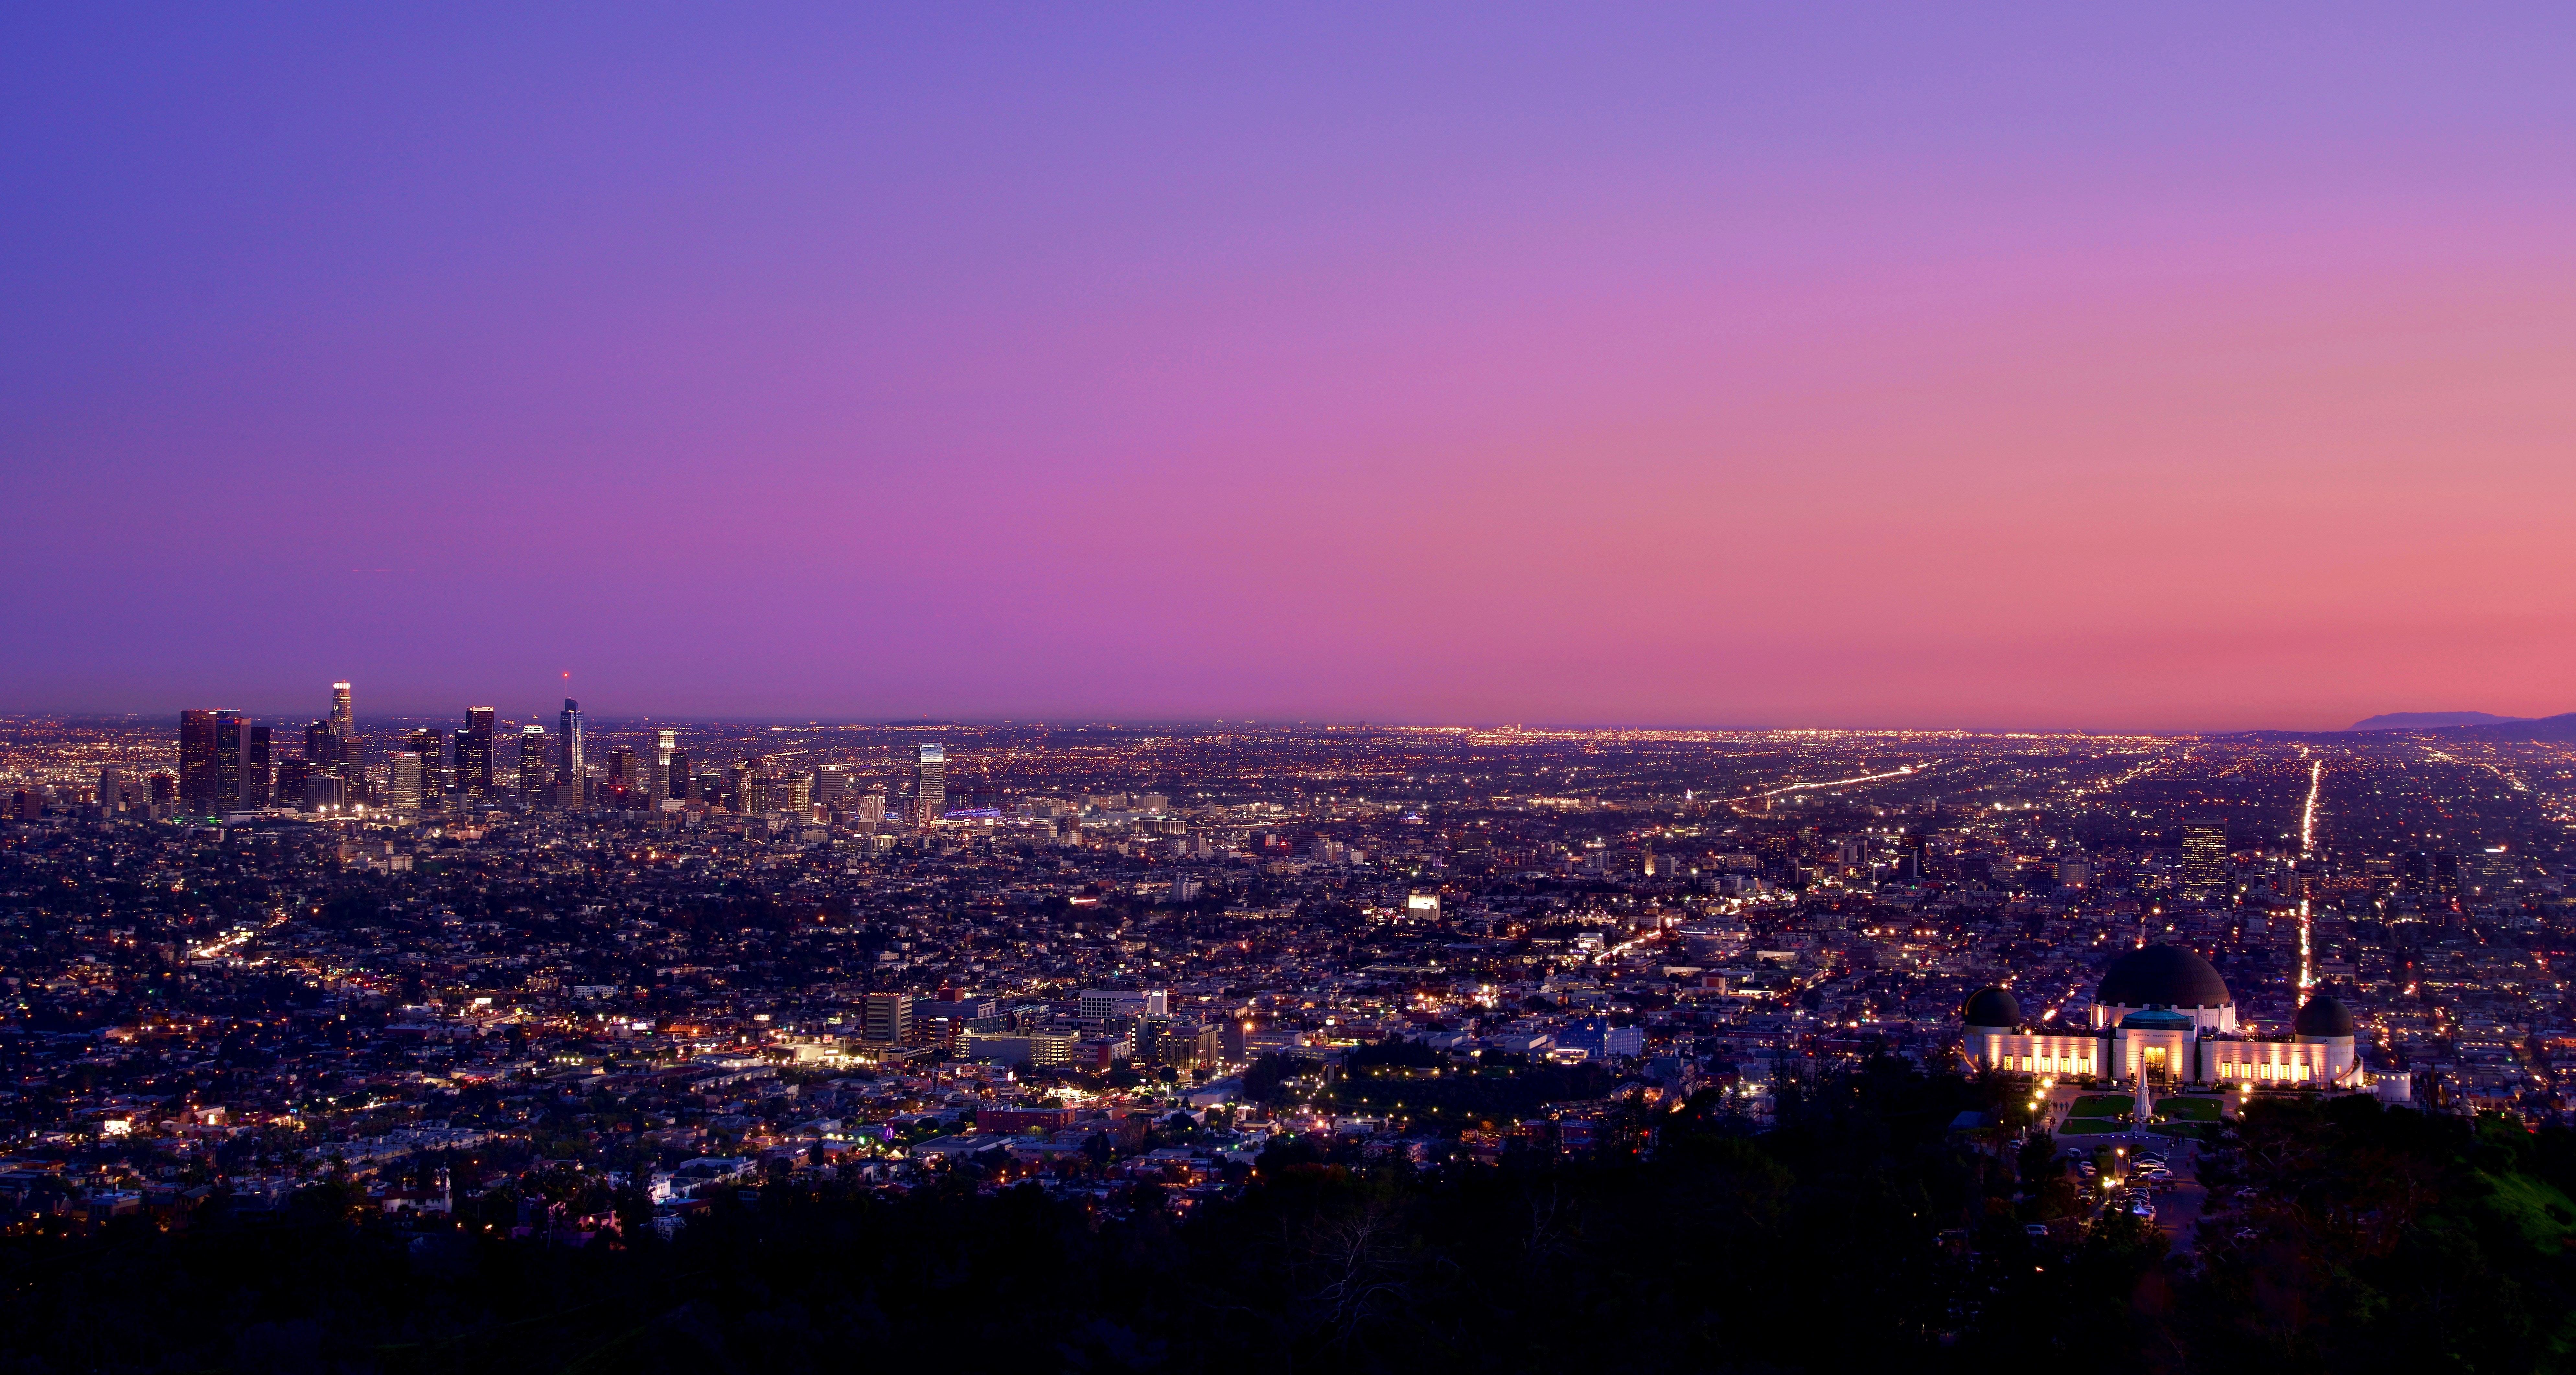 4000x4000 Resolution Los Angeles at Night Pink Sky 4000x4000 Resolution ...